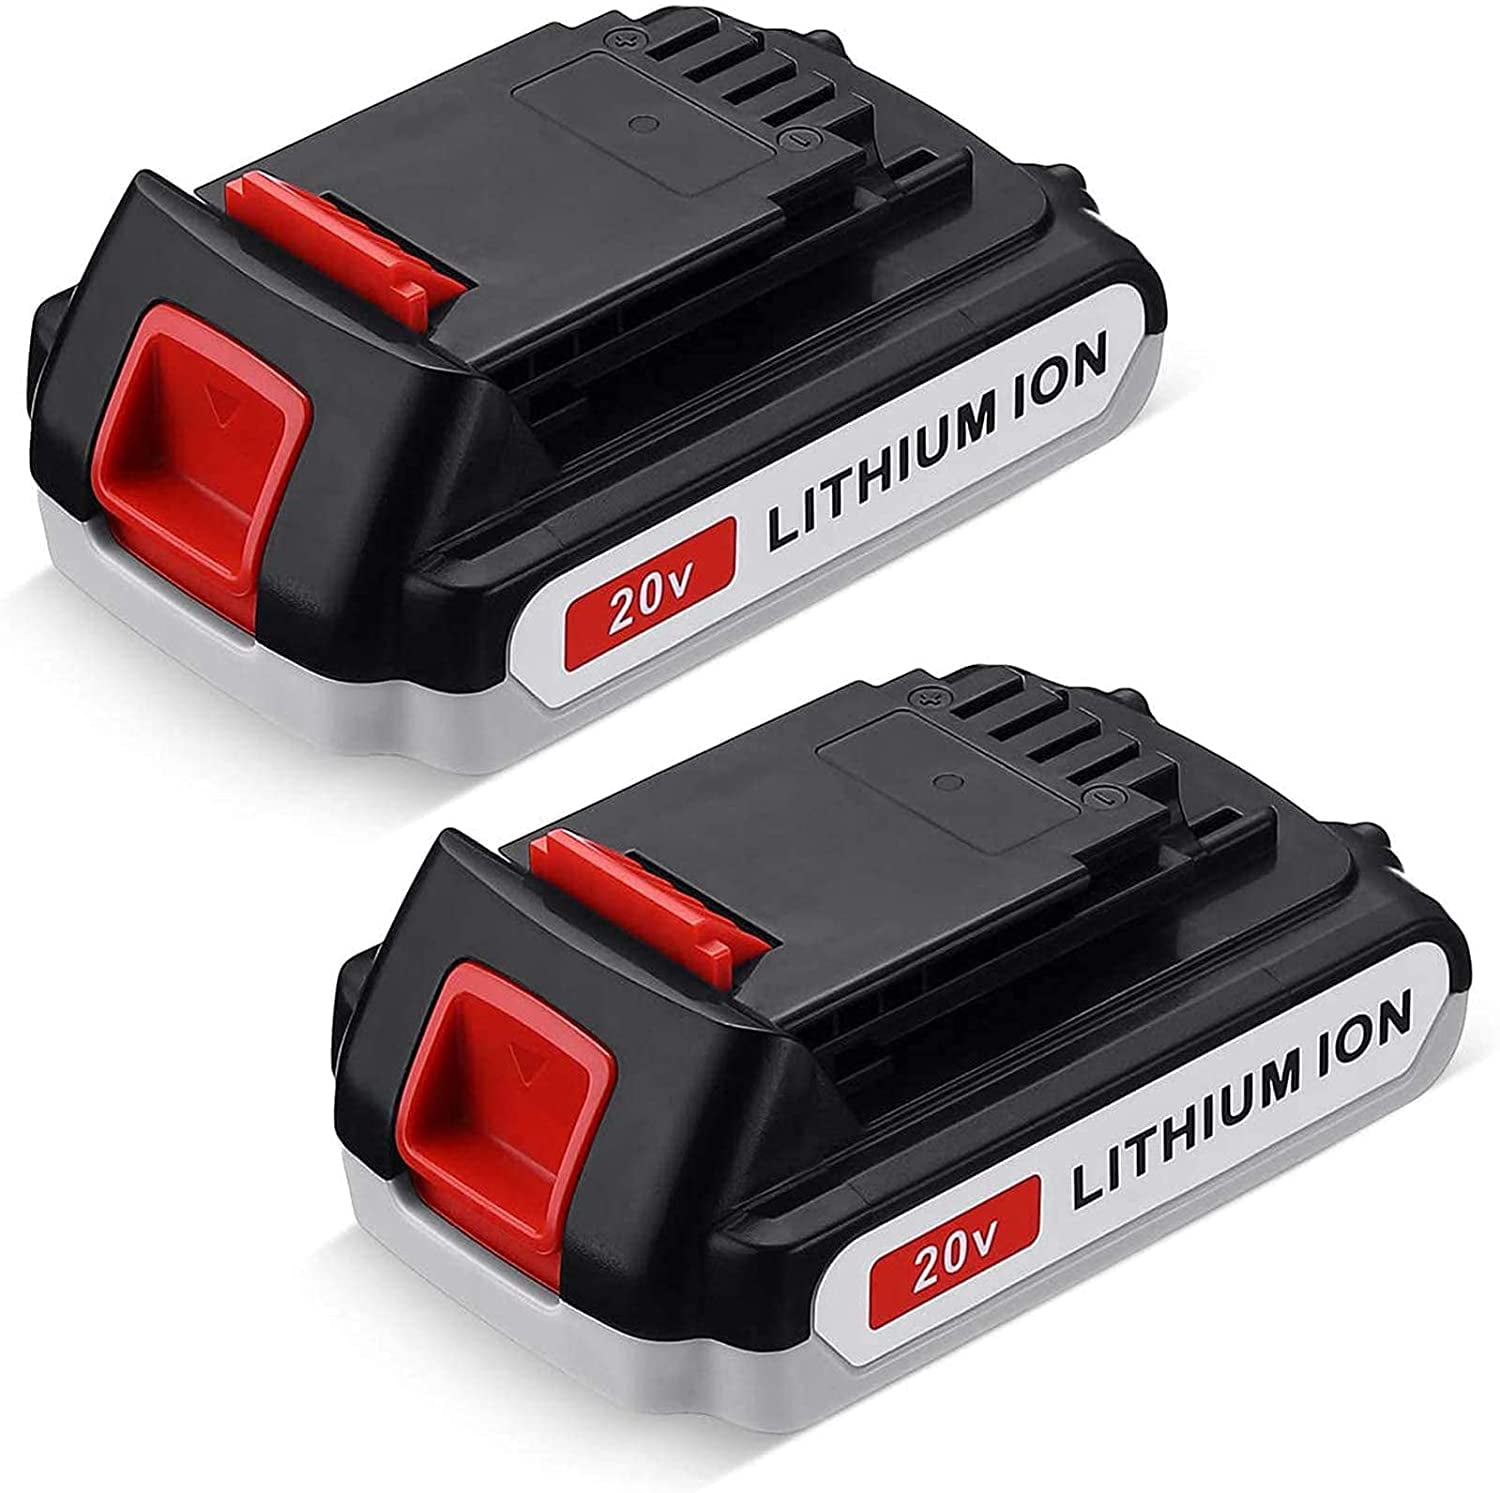 LBXR20 2.0Ah Replace for Black and Decker 20V Battery Max Lithium-ion LB20 LBX20 LST220 LBXR2020-OPE LBXR20B-2 LB2X4020 Cordless Tool Battery 